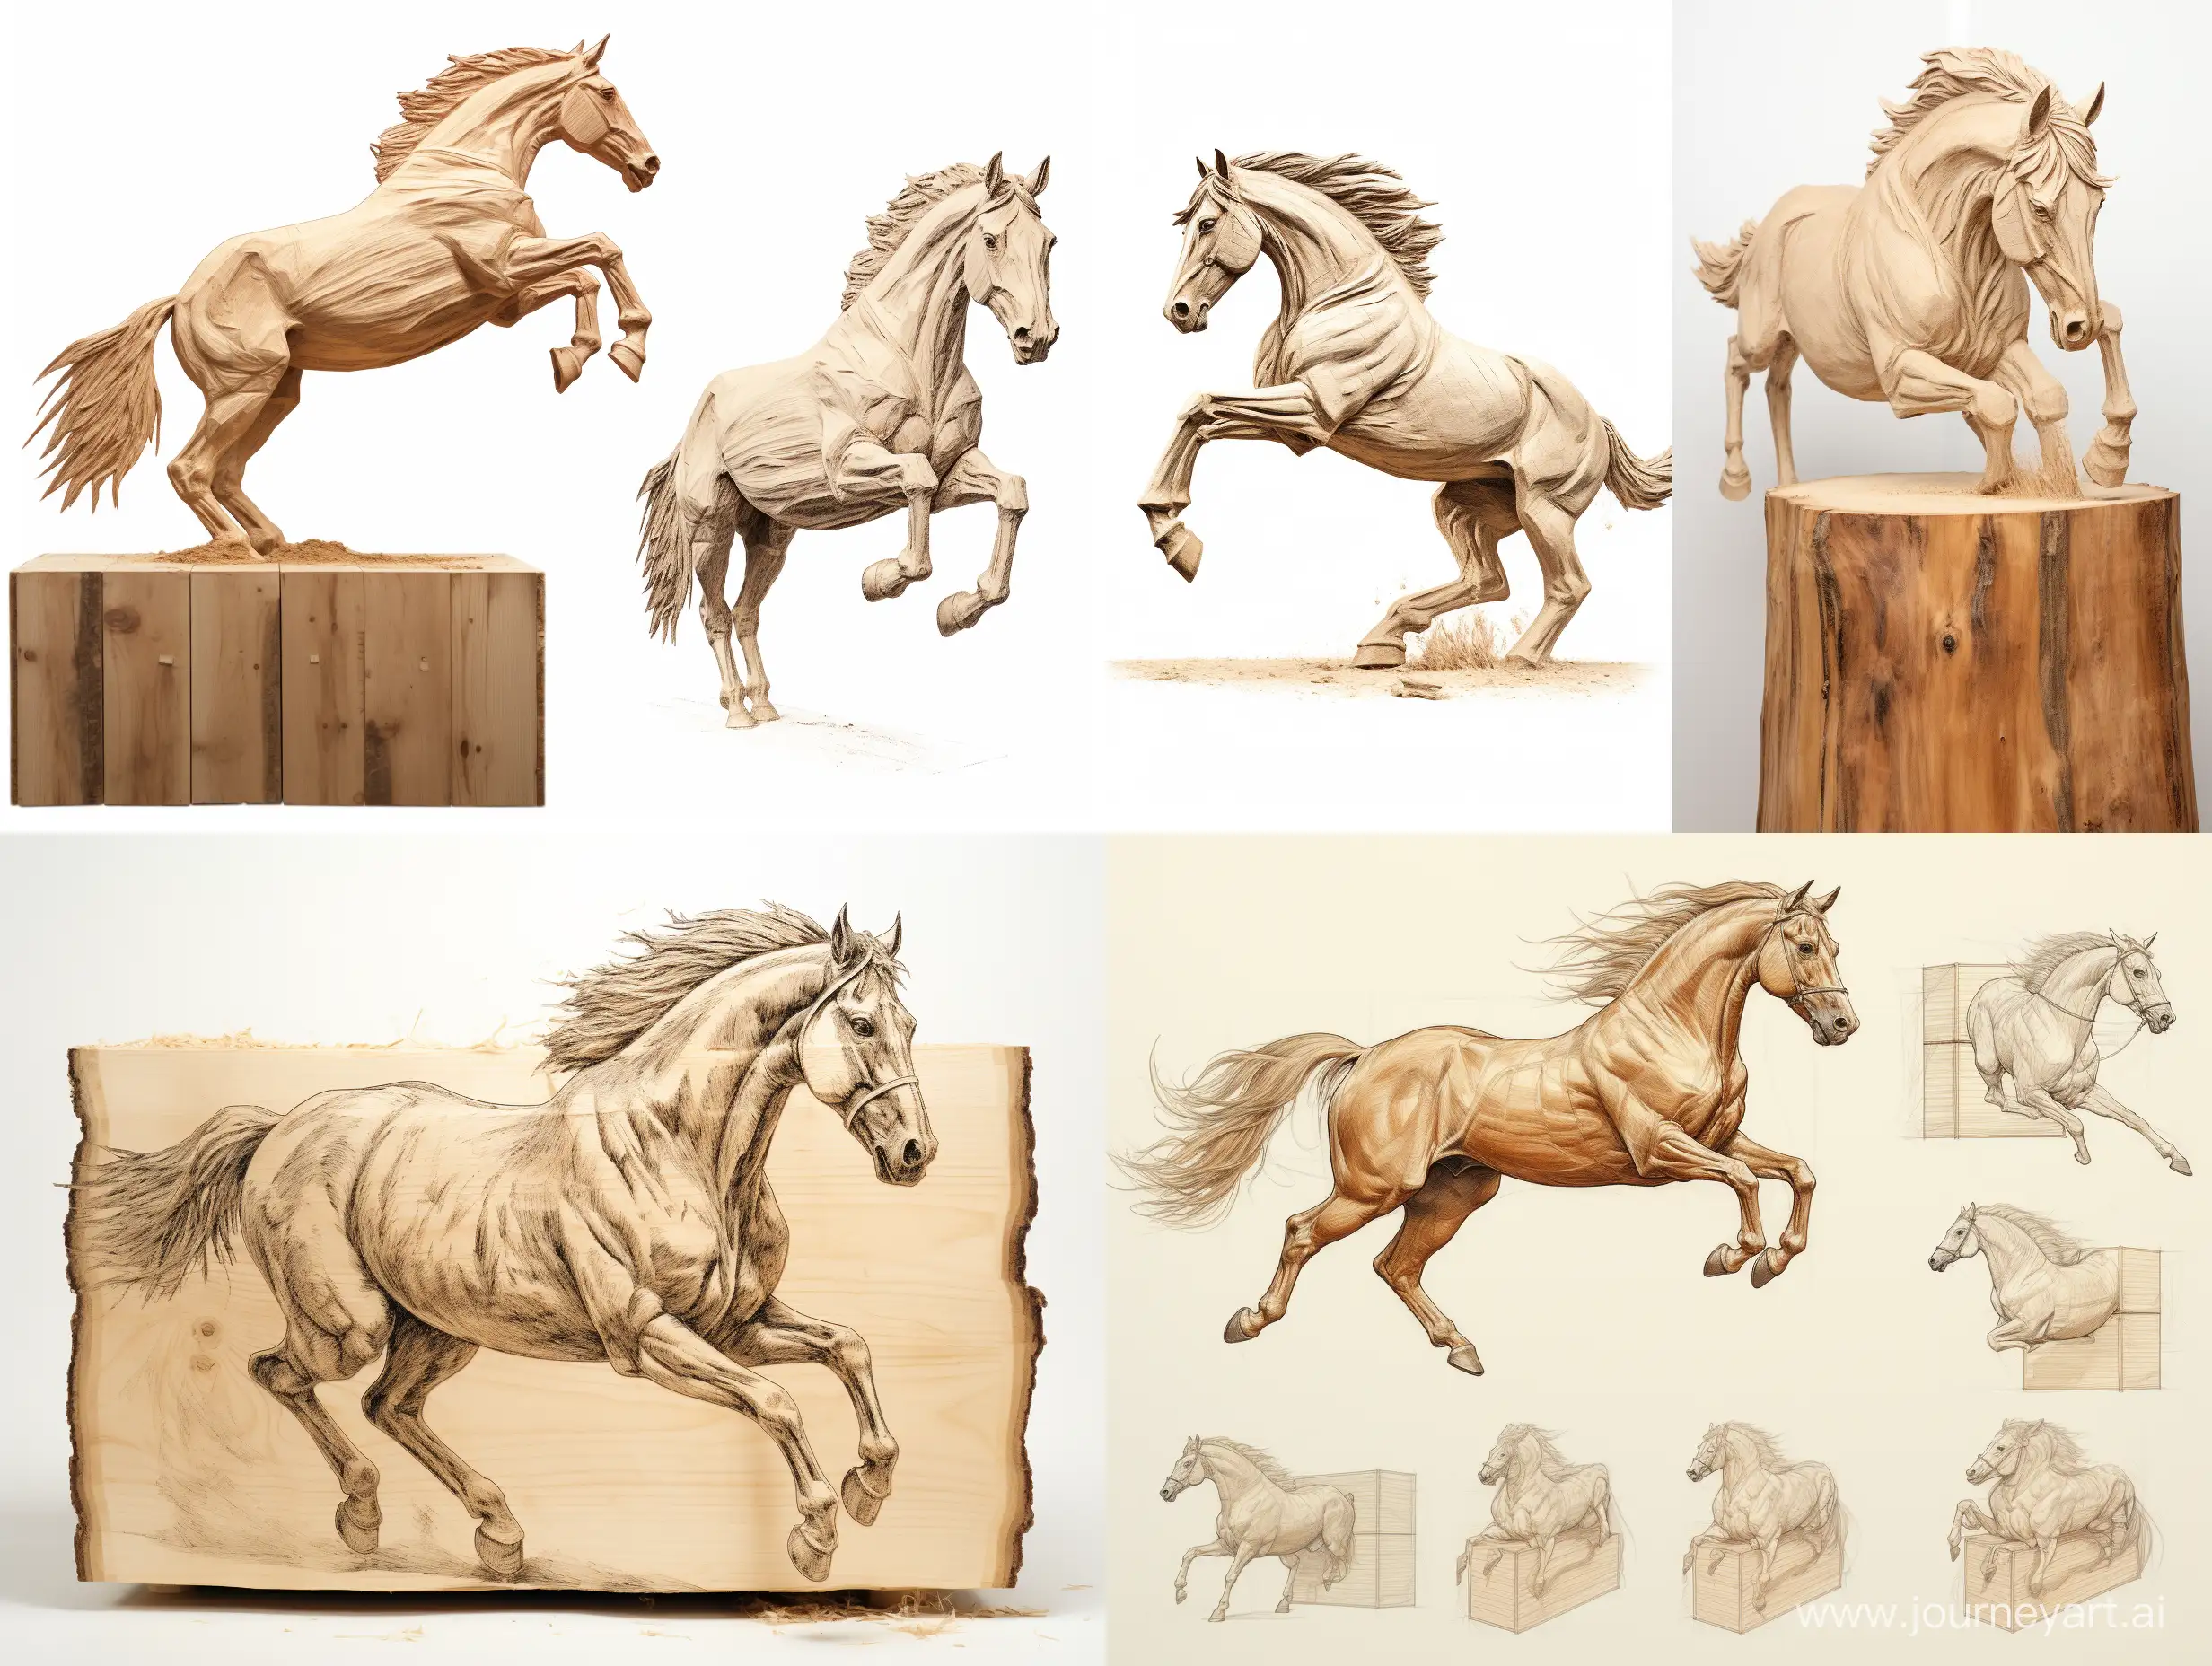 Dynamic-LifeSize-Wooden-Horse-Sculpture-for-Battle-8K-Ultra-Realistic-3D-Concept-Art